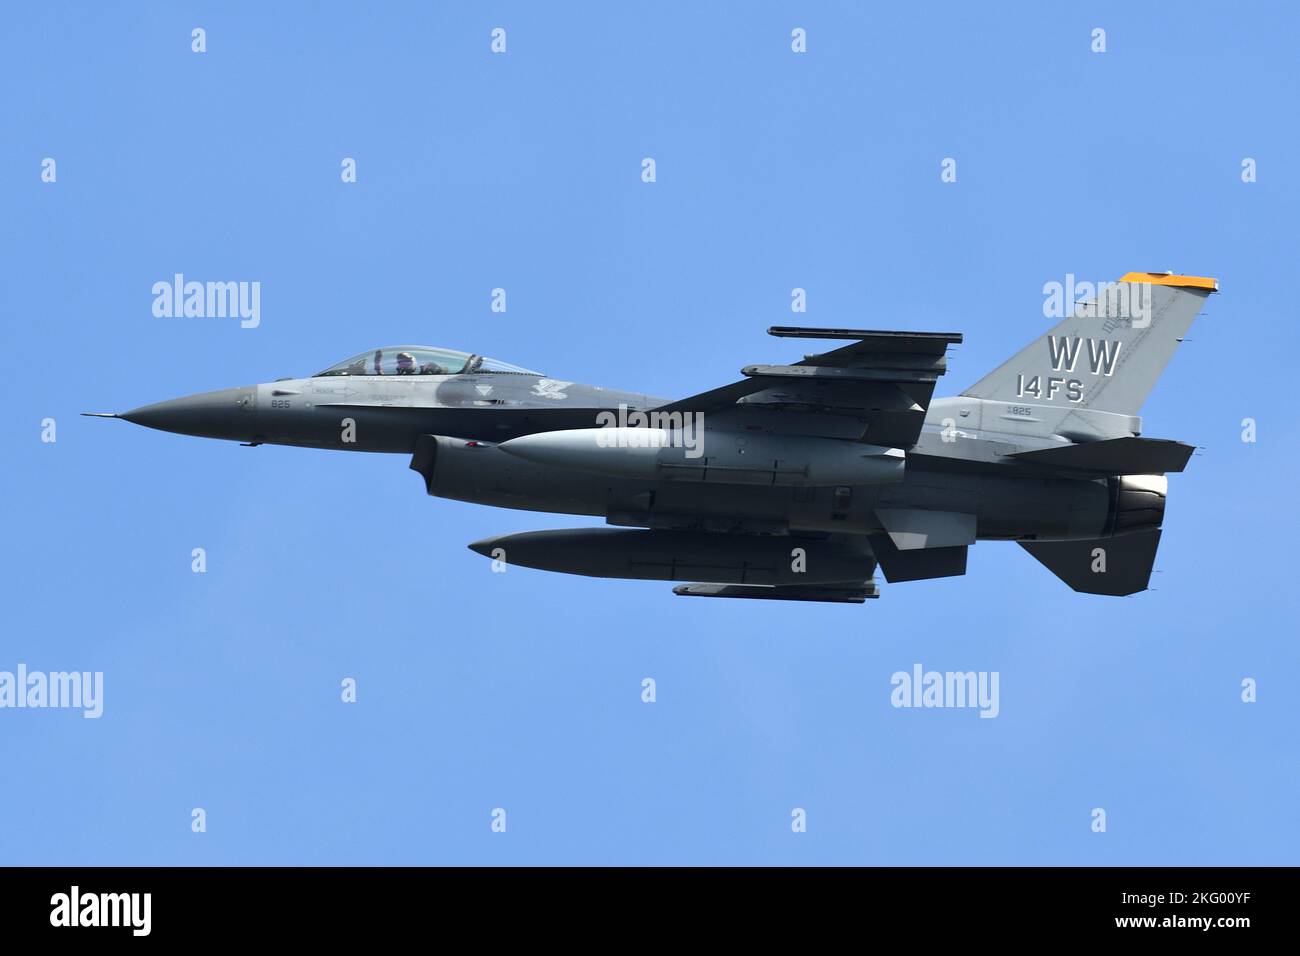 Präfektur Aomori, Japan - 11. September 2022: United States Air Force Lockheed Martin F-16C Fighting Falcon Multirole Fighter Aircraft. Stockfoto